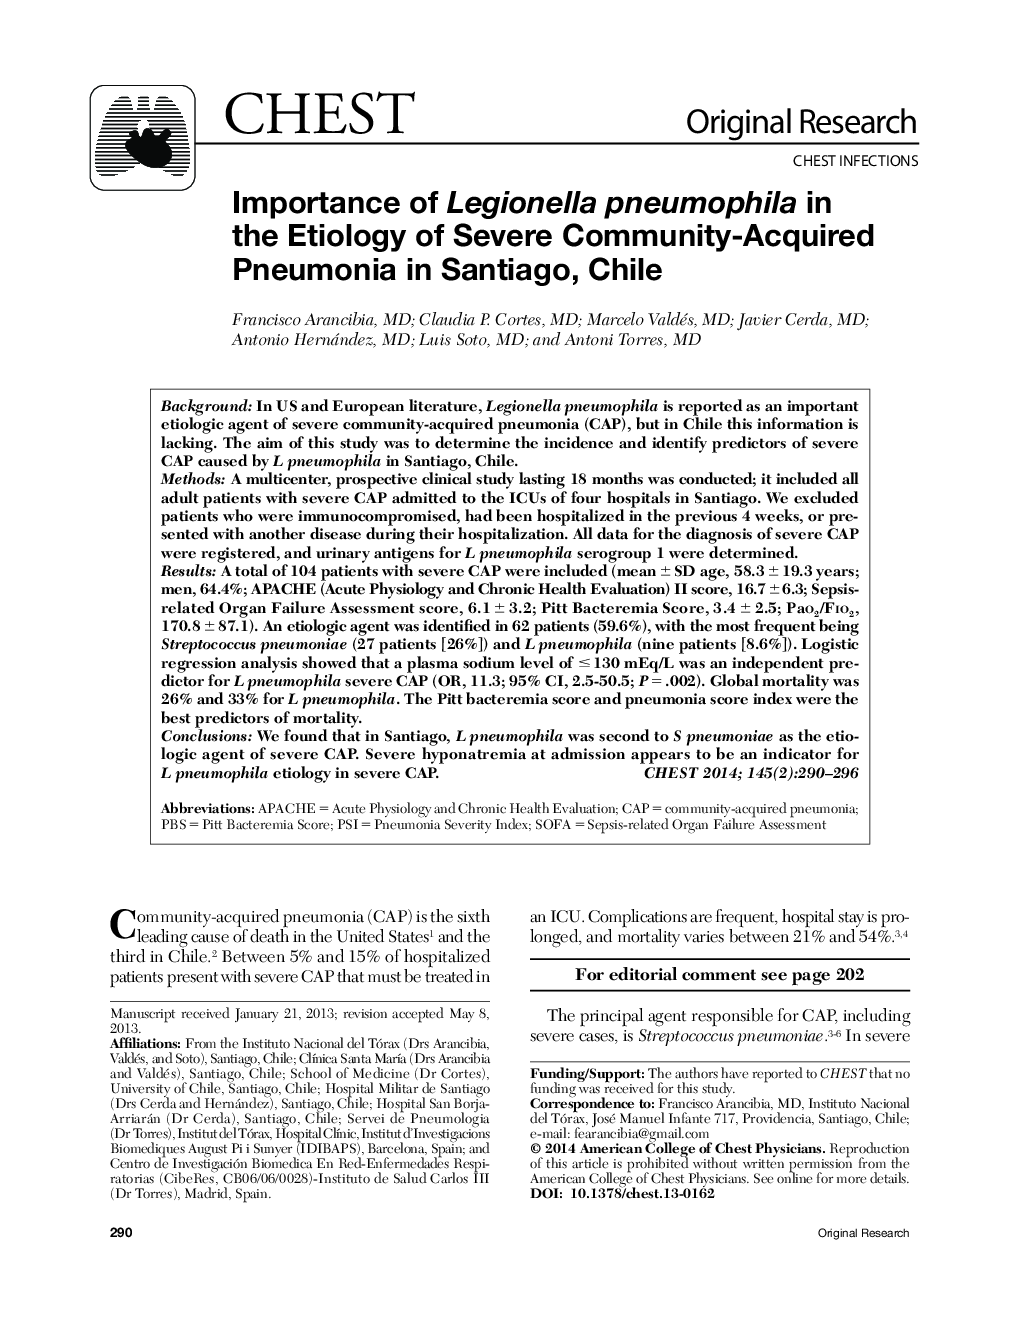 Importance of Legionella pneumophila in the Etiology of Severe Community-Acquired Pneumonia in Santiago, Chile